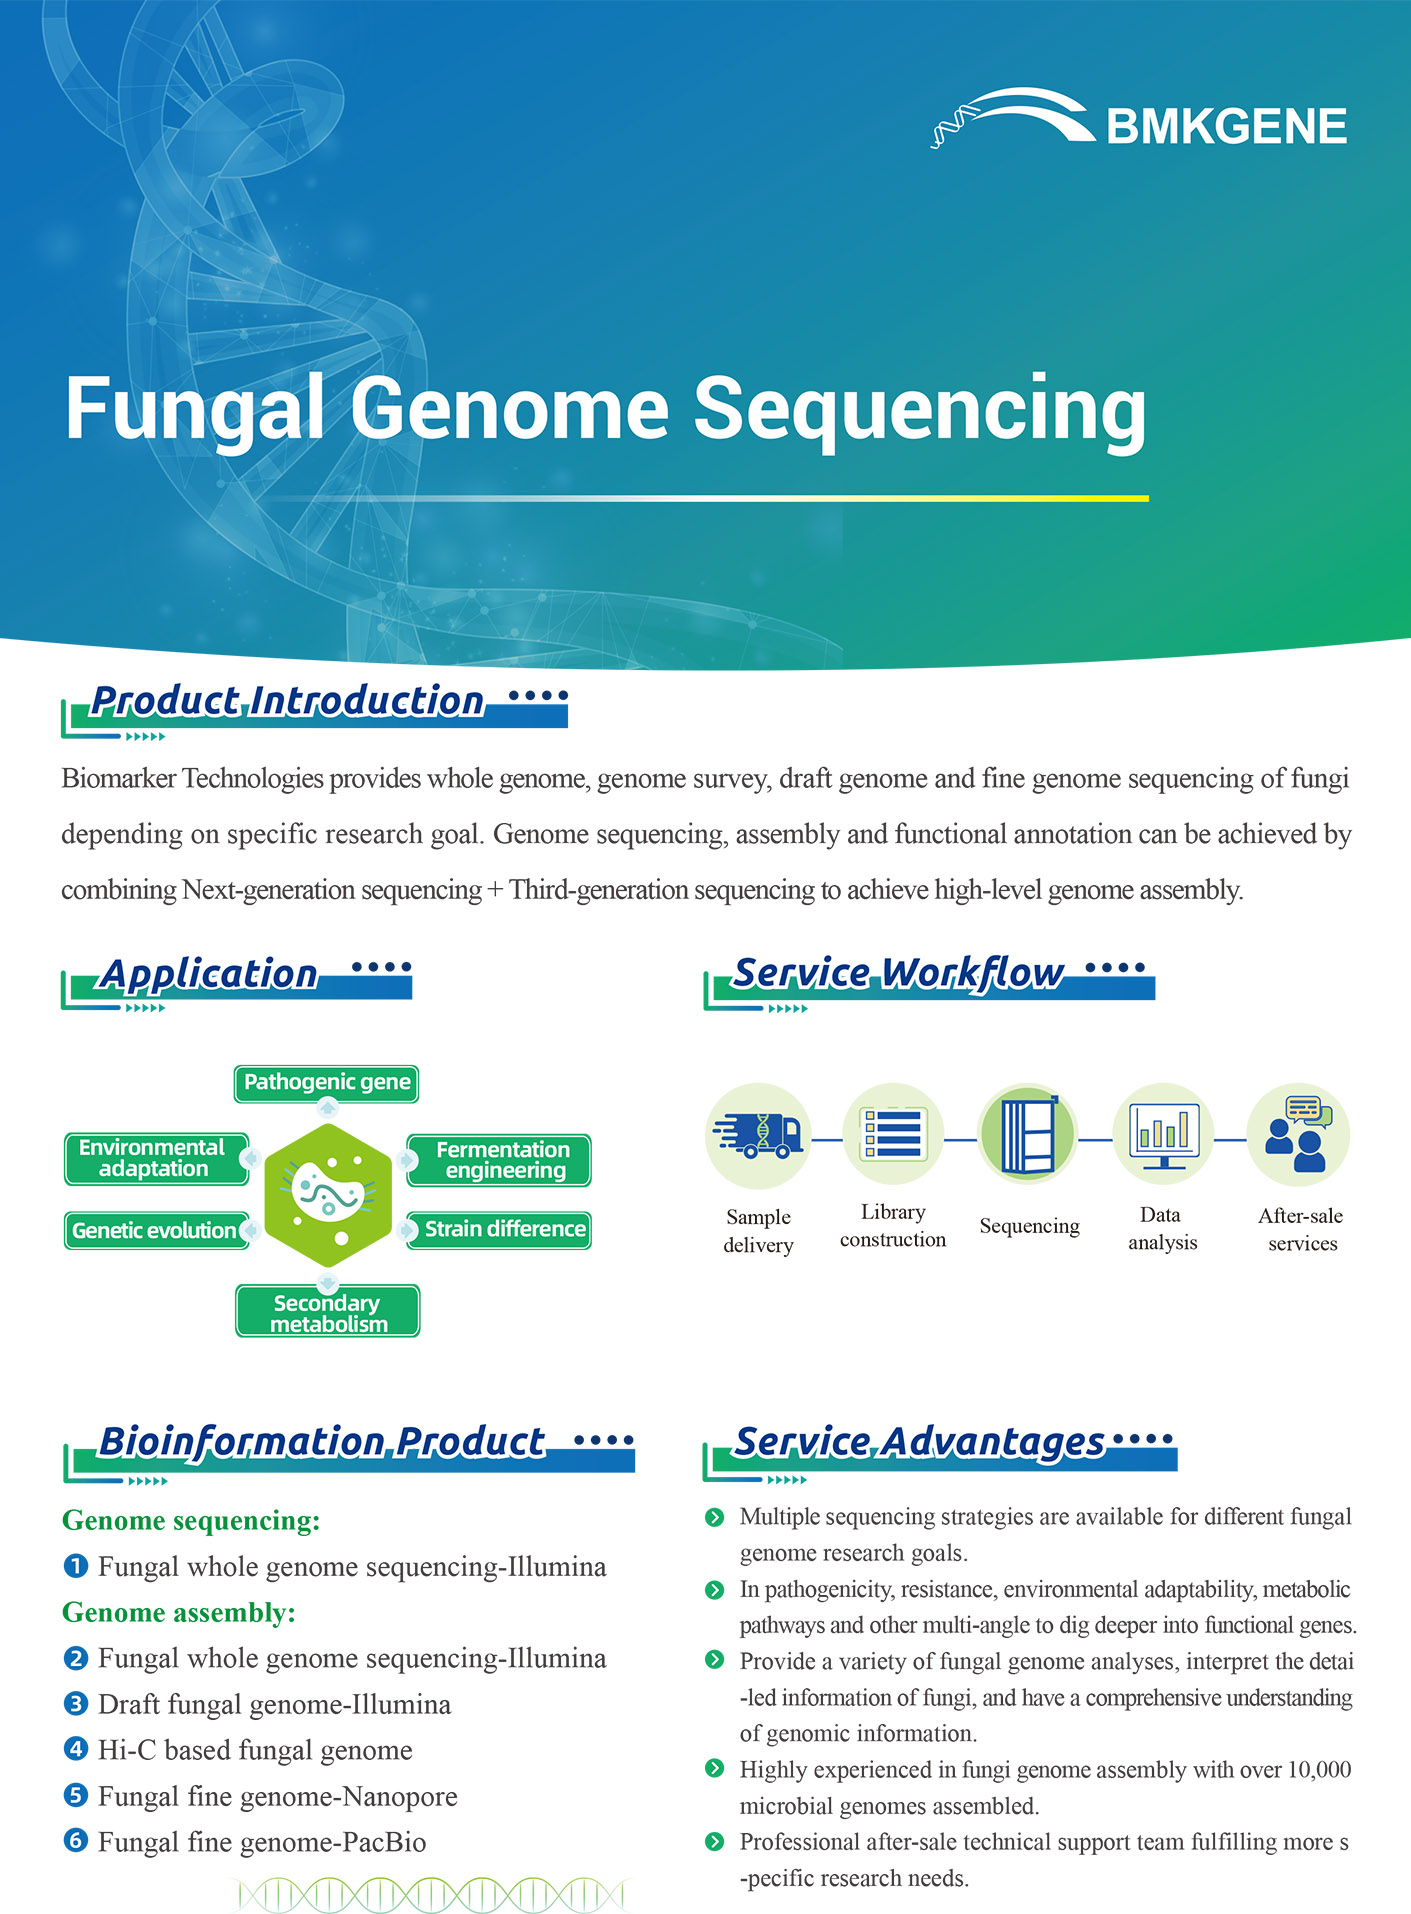 http://www.bmkgene.com/uploads/Fungal-Genome-Sequencing-BMKGENE-2023.122.pdf